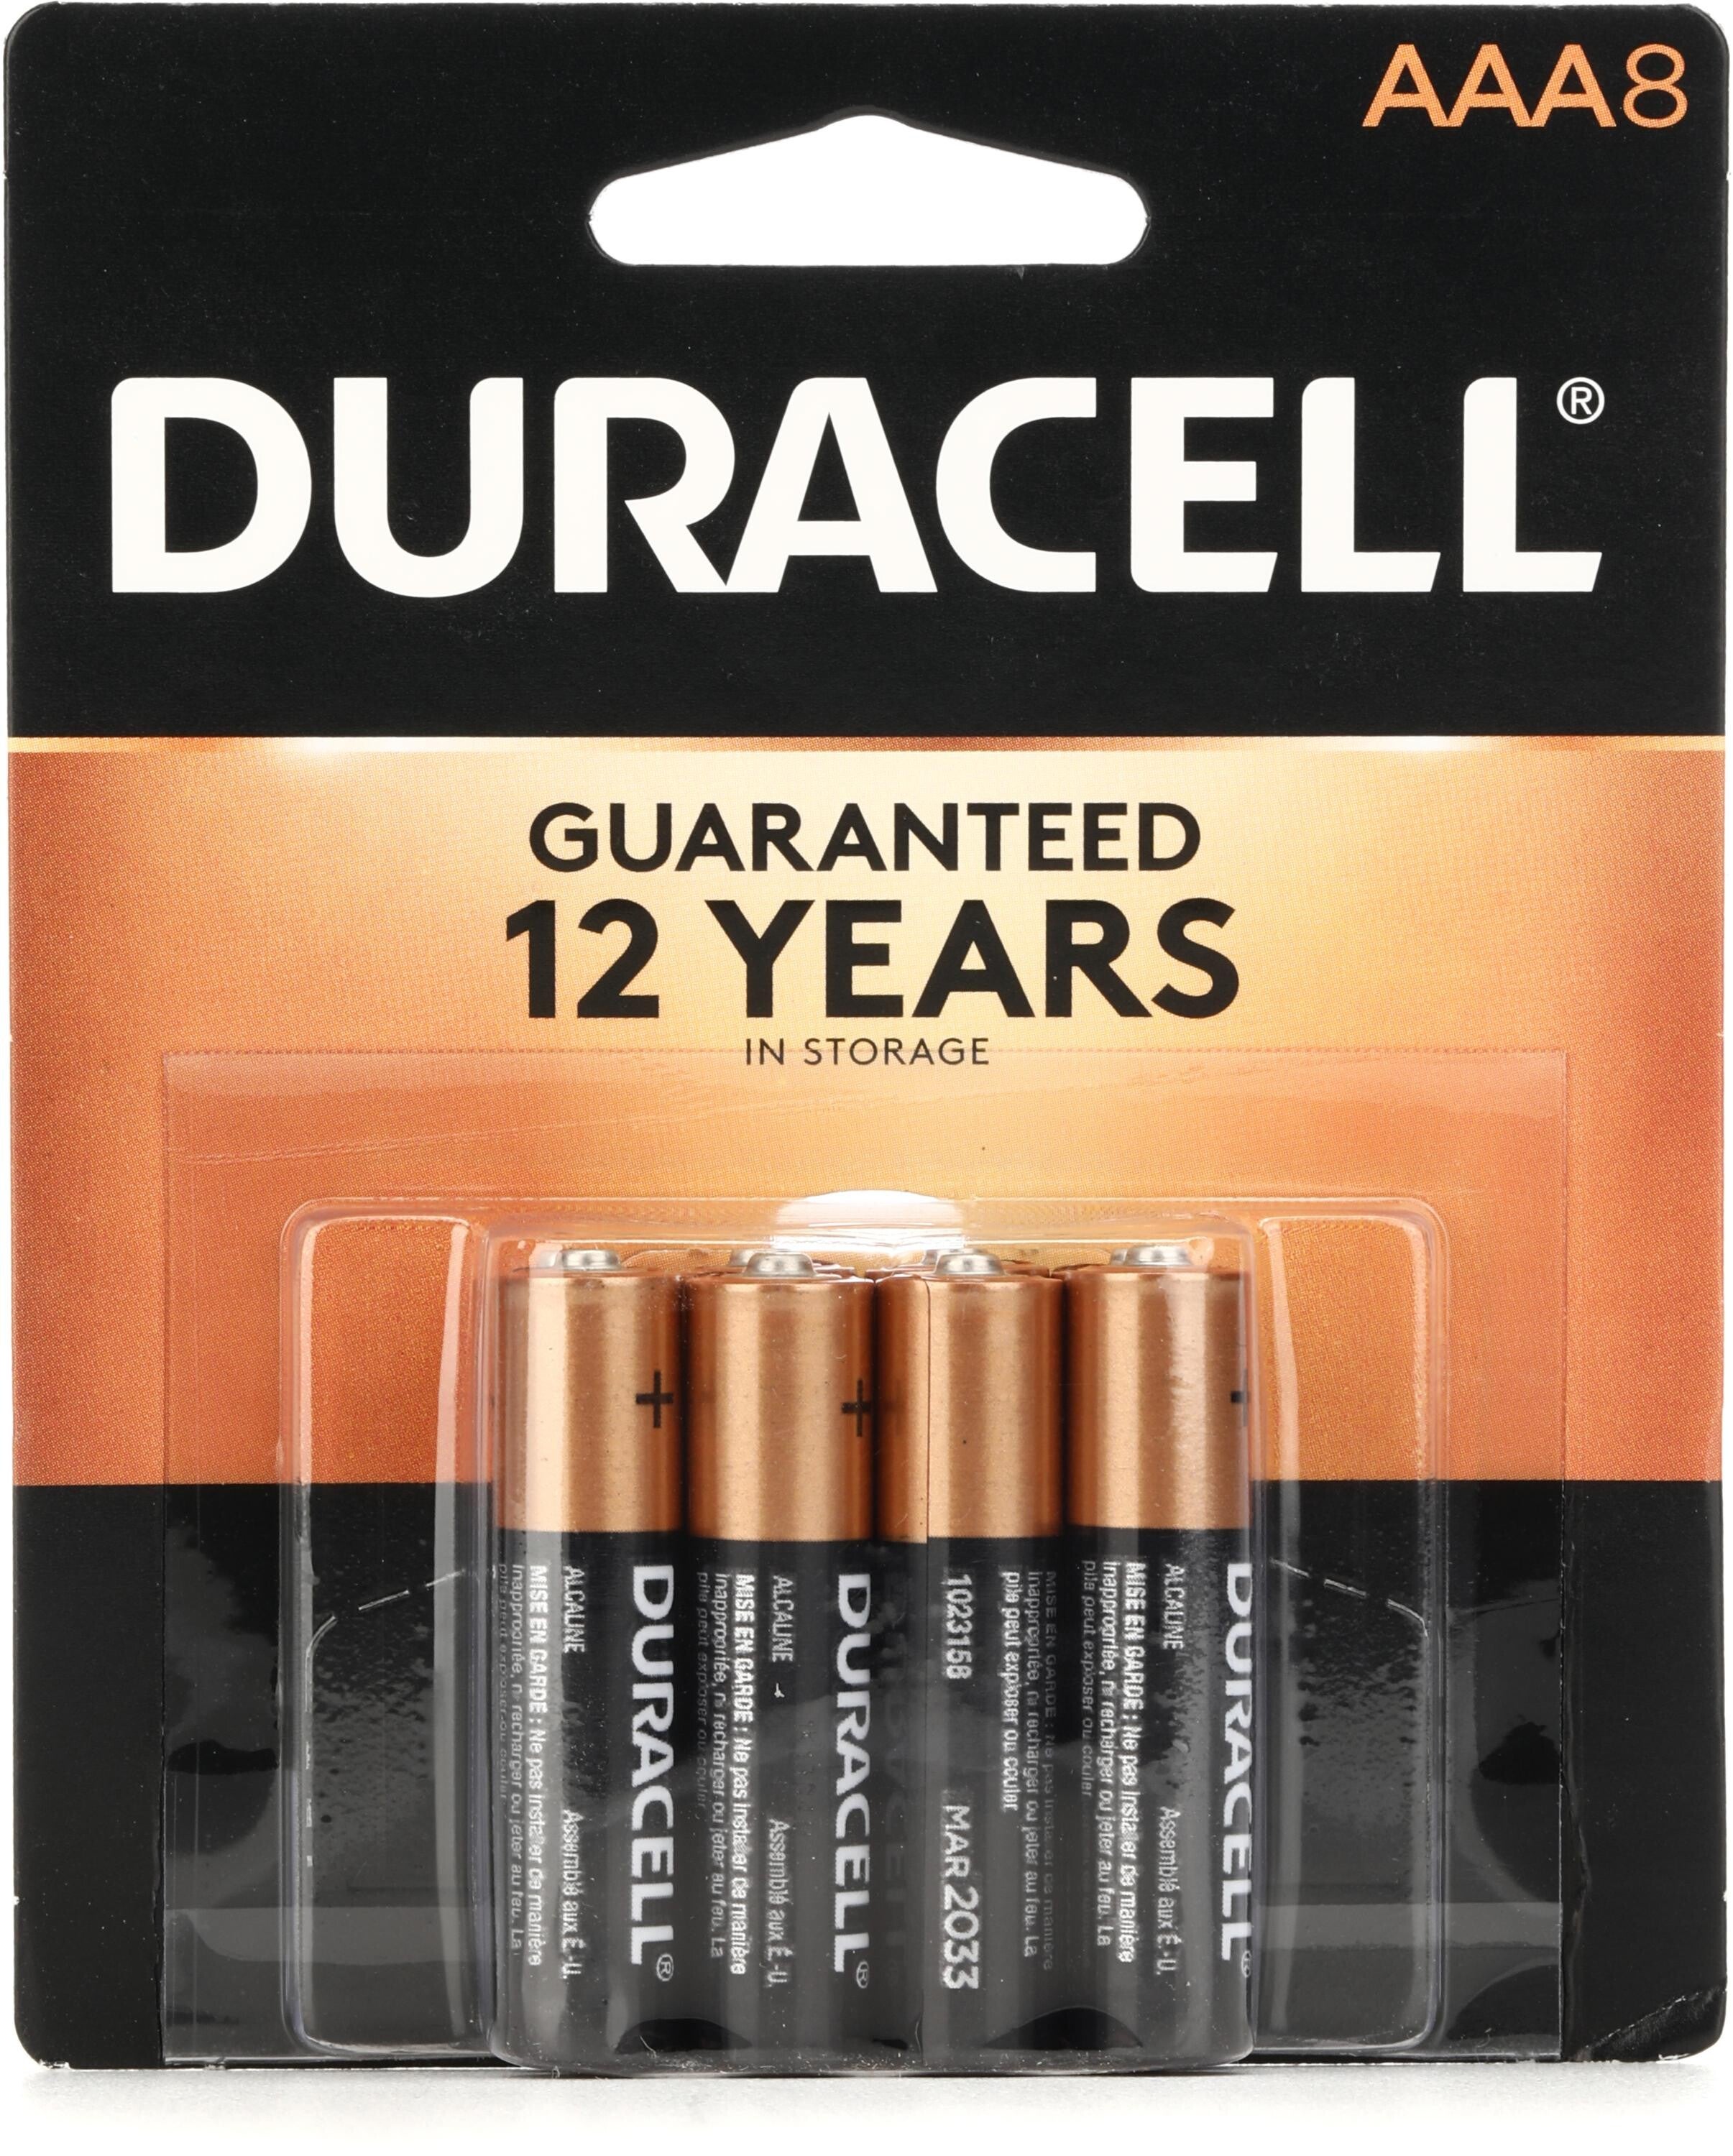 Bundled Item: Duracell Coppertop AAA Alkaline Battery (8-pack)